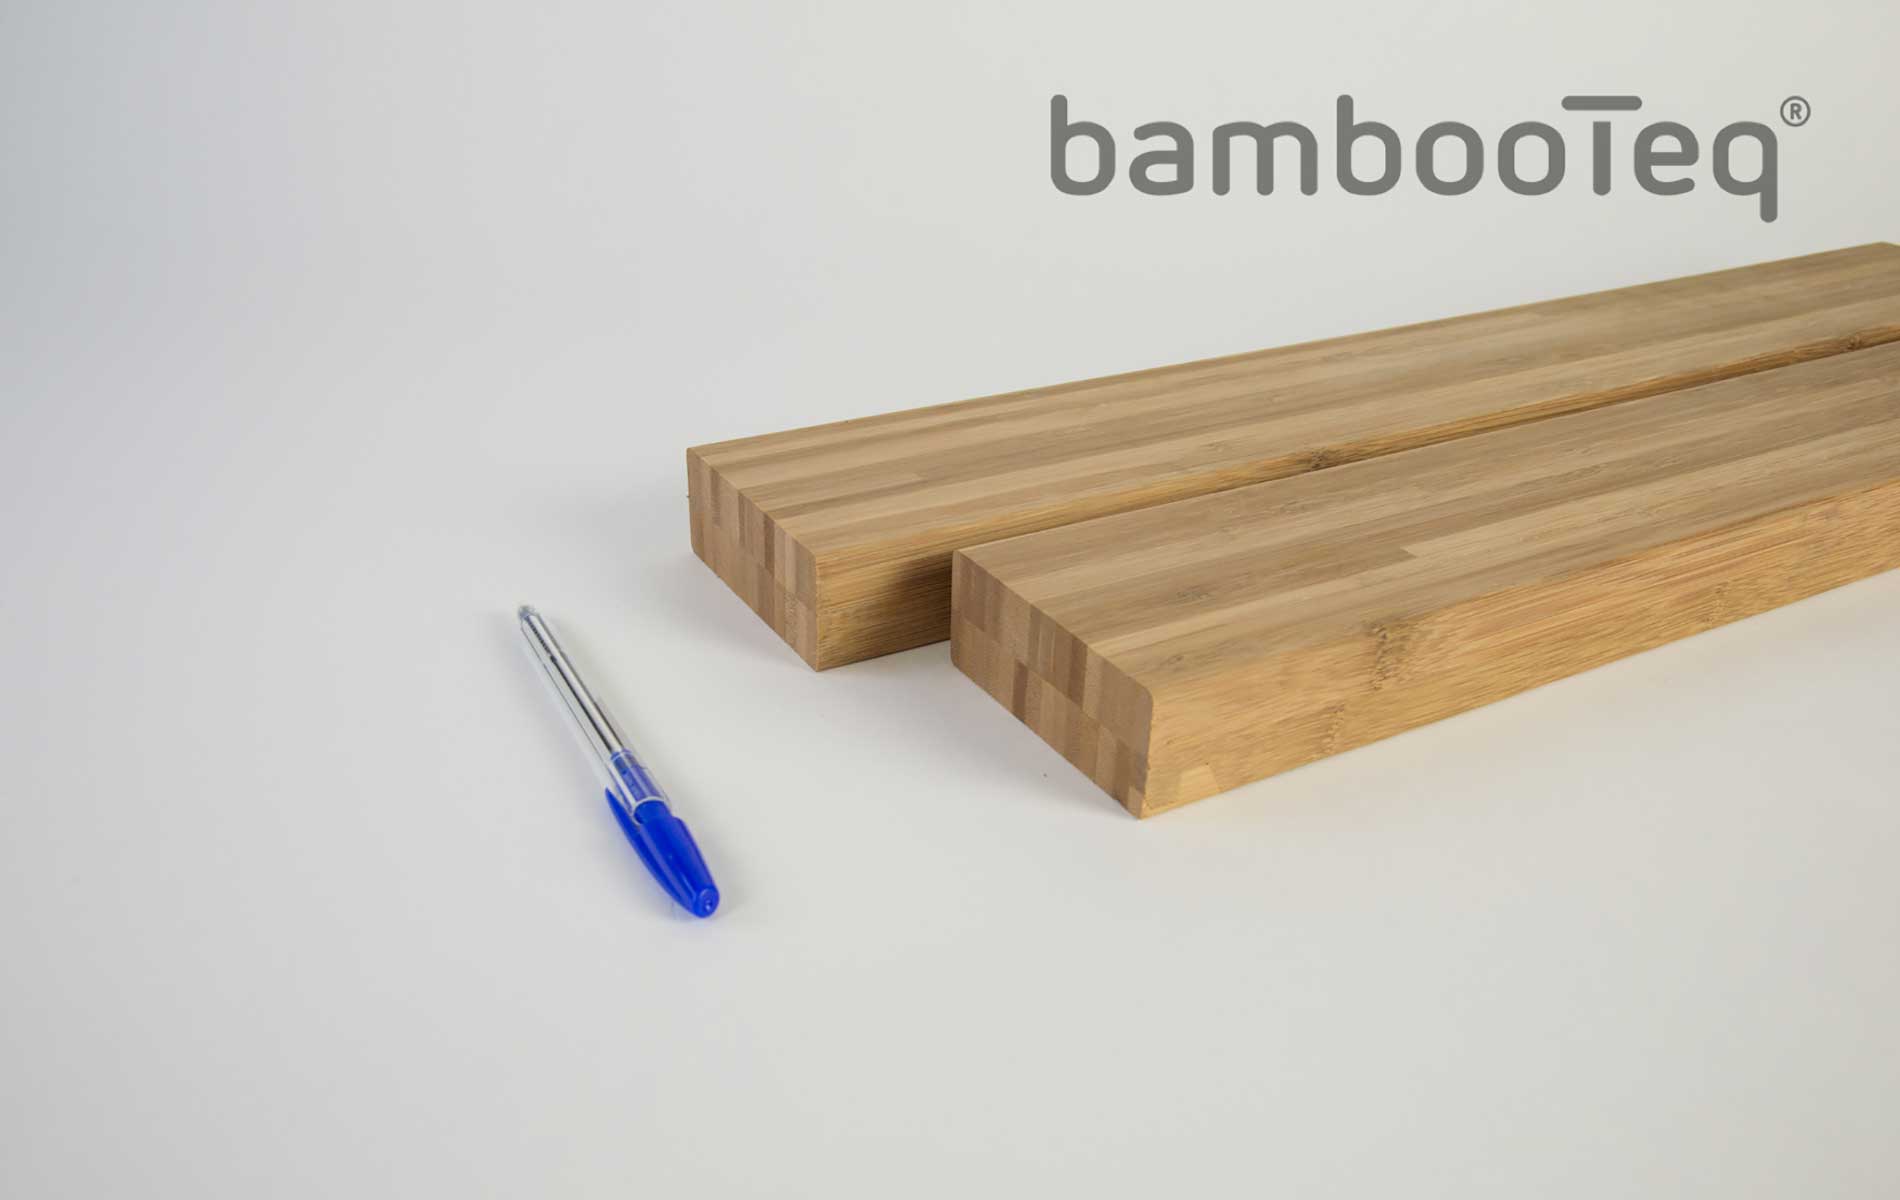 Fractie Aankoop Assert BambooTeq Serie 1 bamboe balk 35 x 90 x 5800 mm – BambooTeq